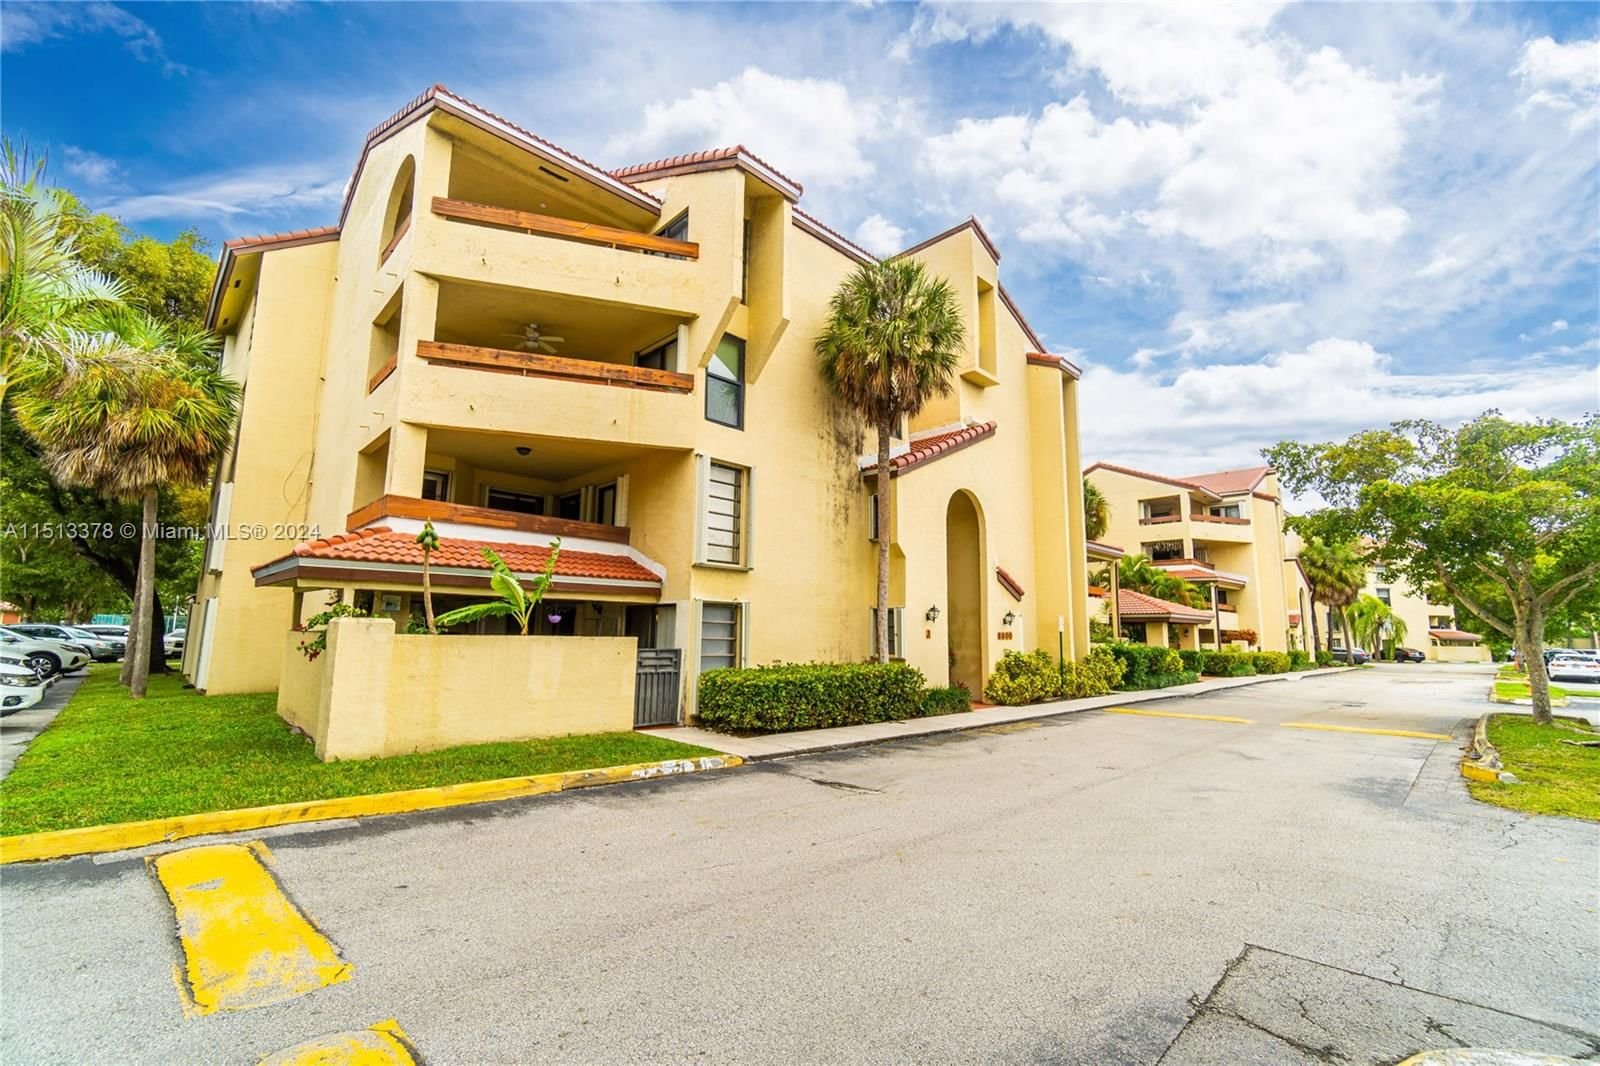 Real estate property located at 8800 123rd Ct J-106, Miami-Dade County, KENLAND BEND NORTH CONDO, Miami, FL